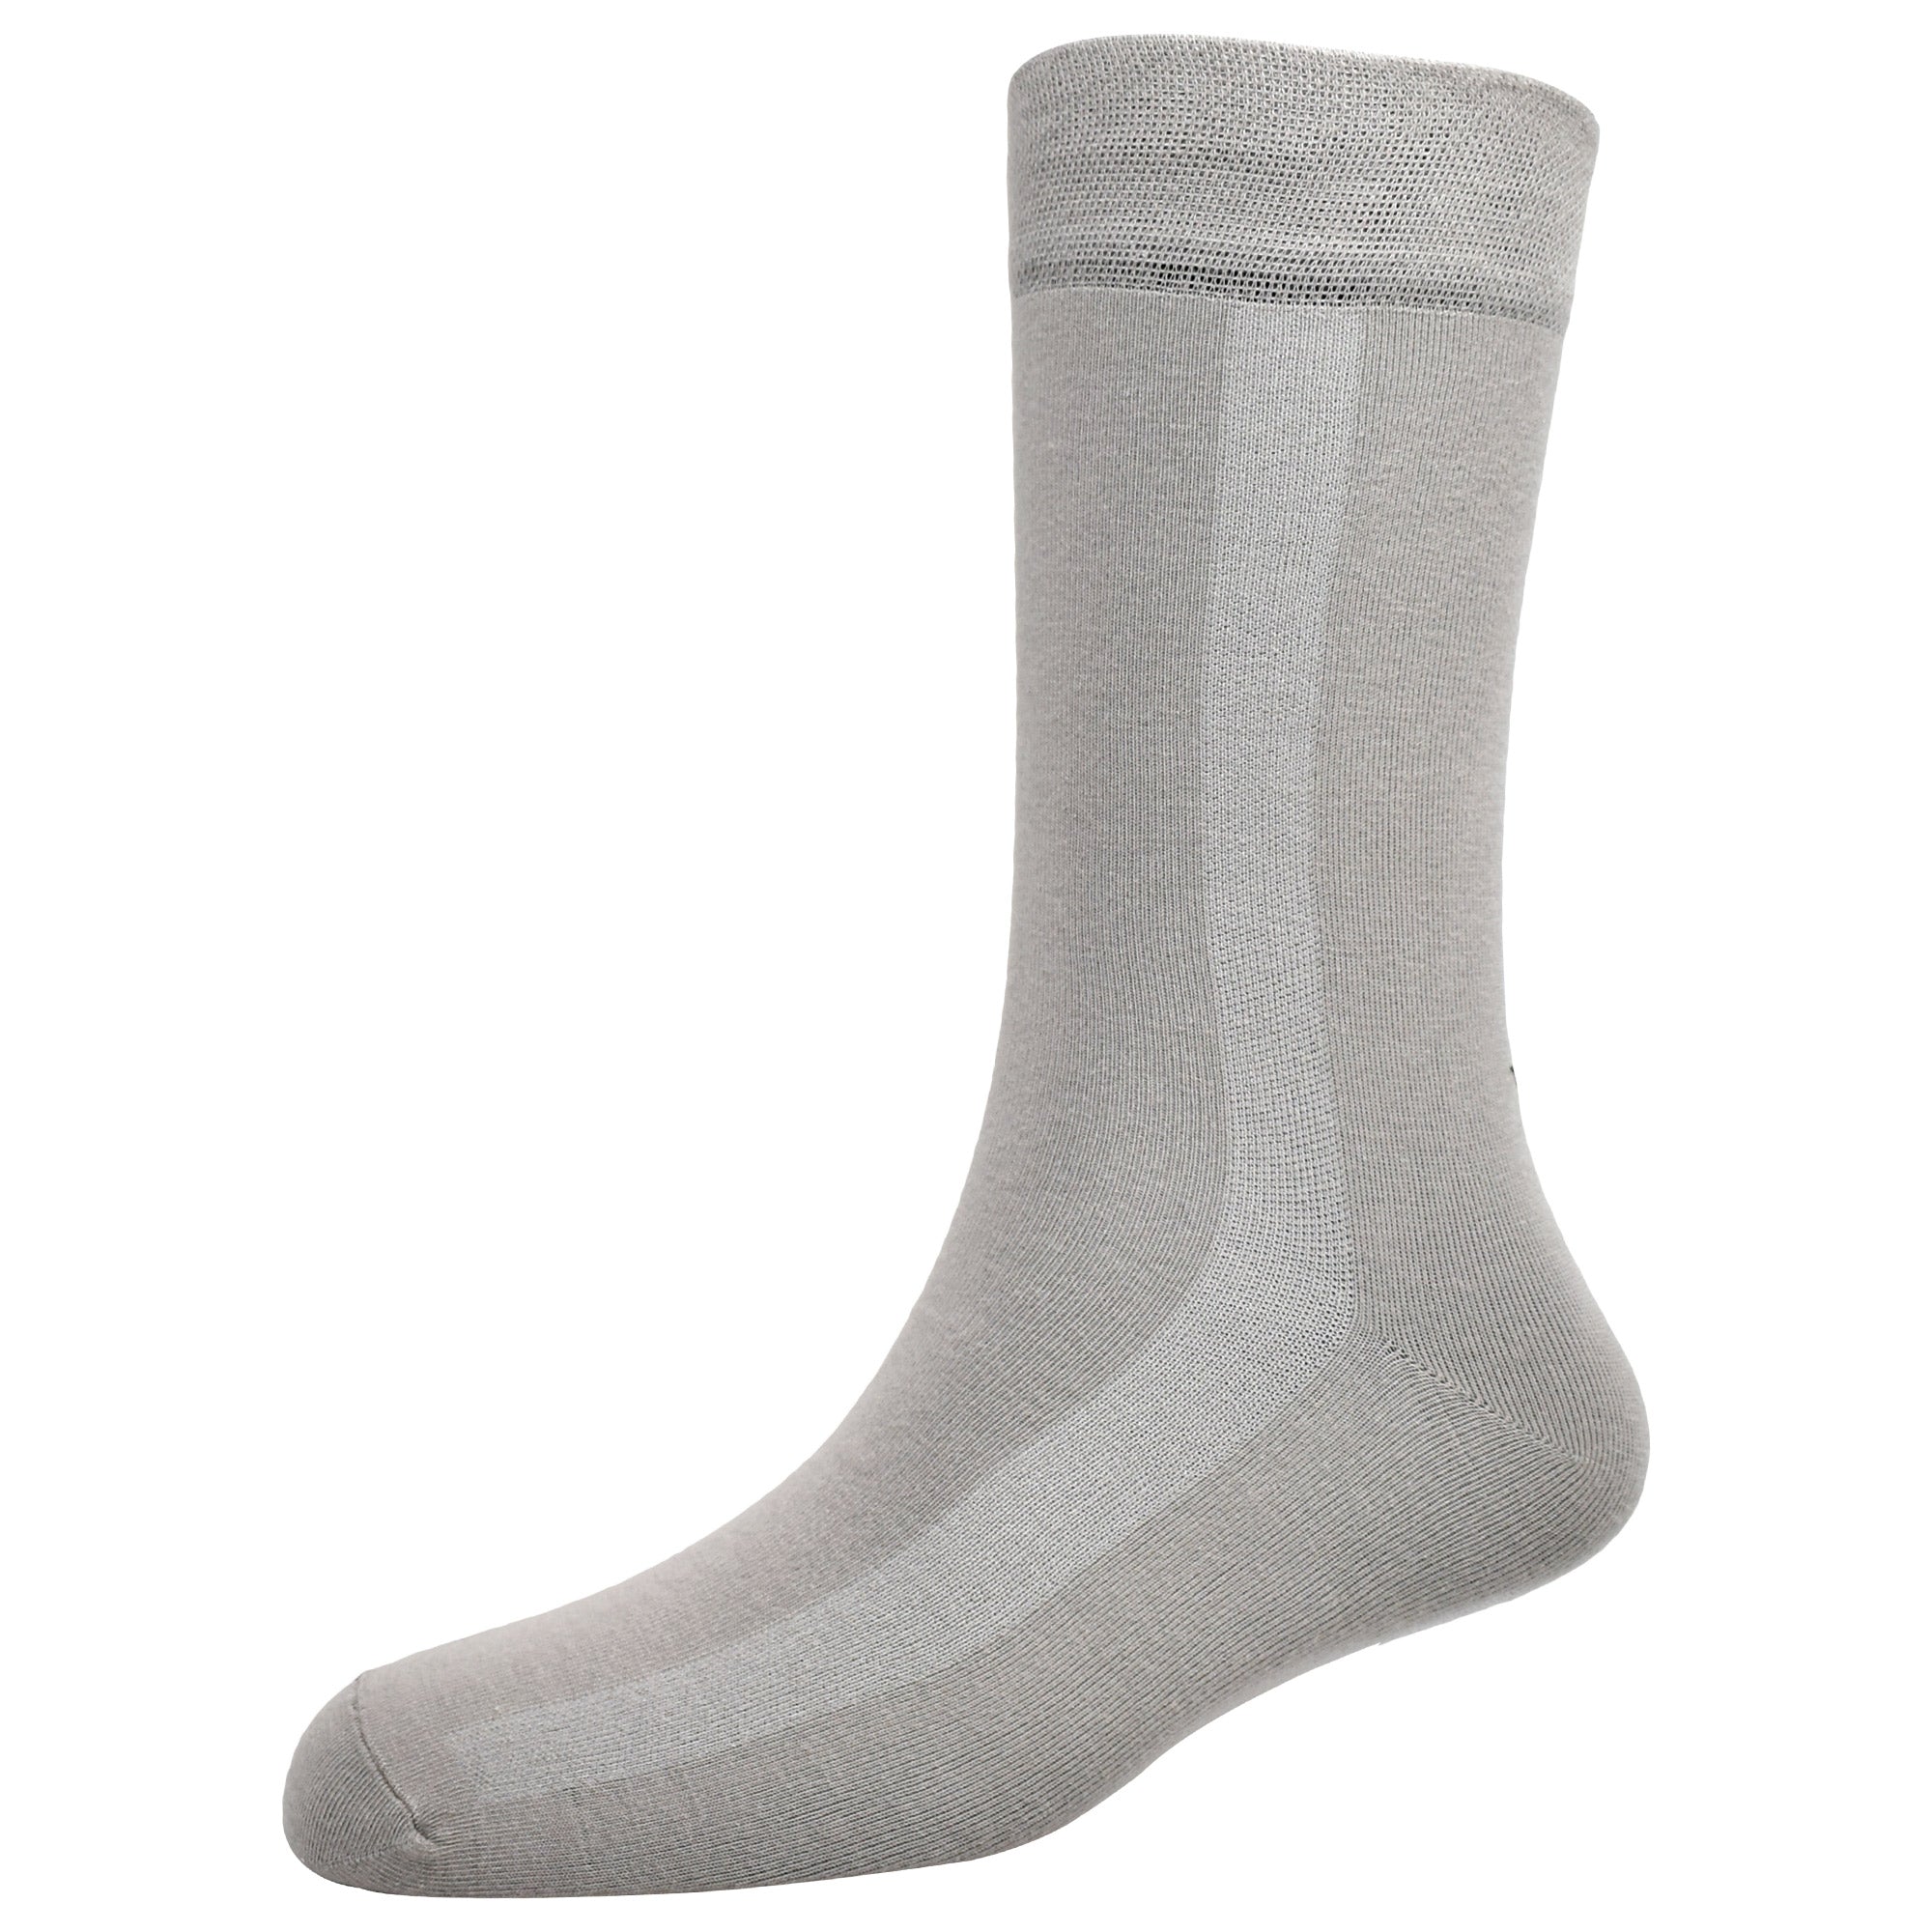 Men's HEALTH Crew Socks - Pack of 2 pairs